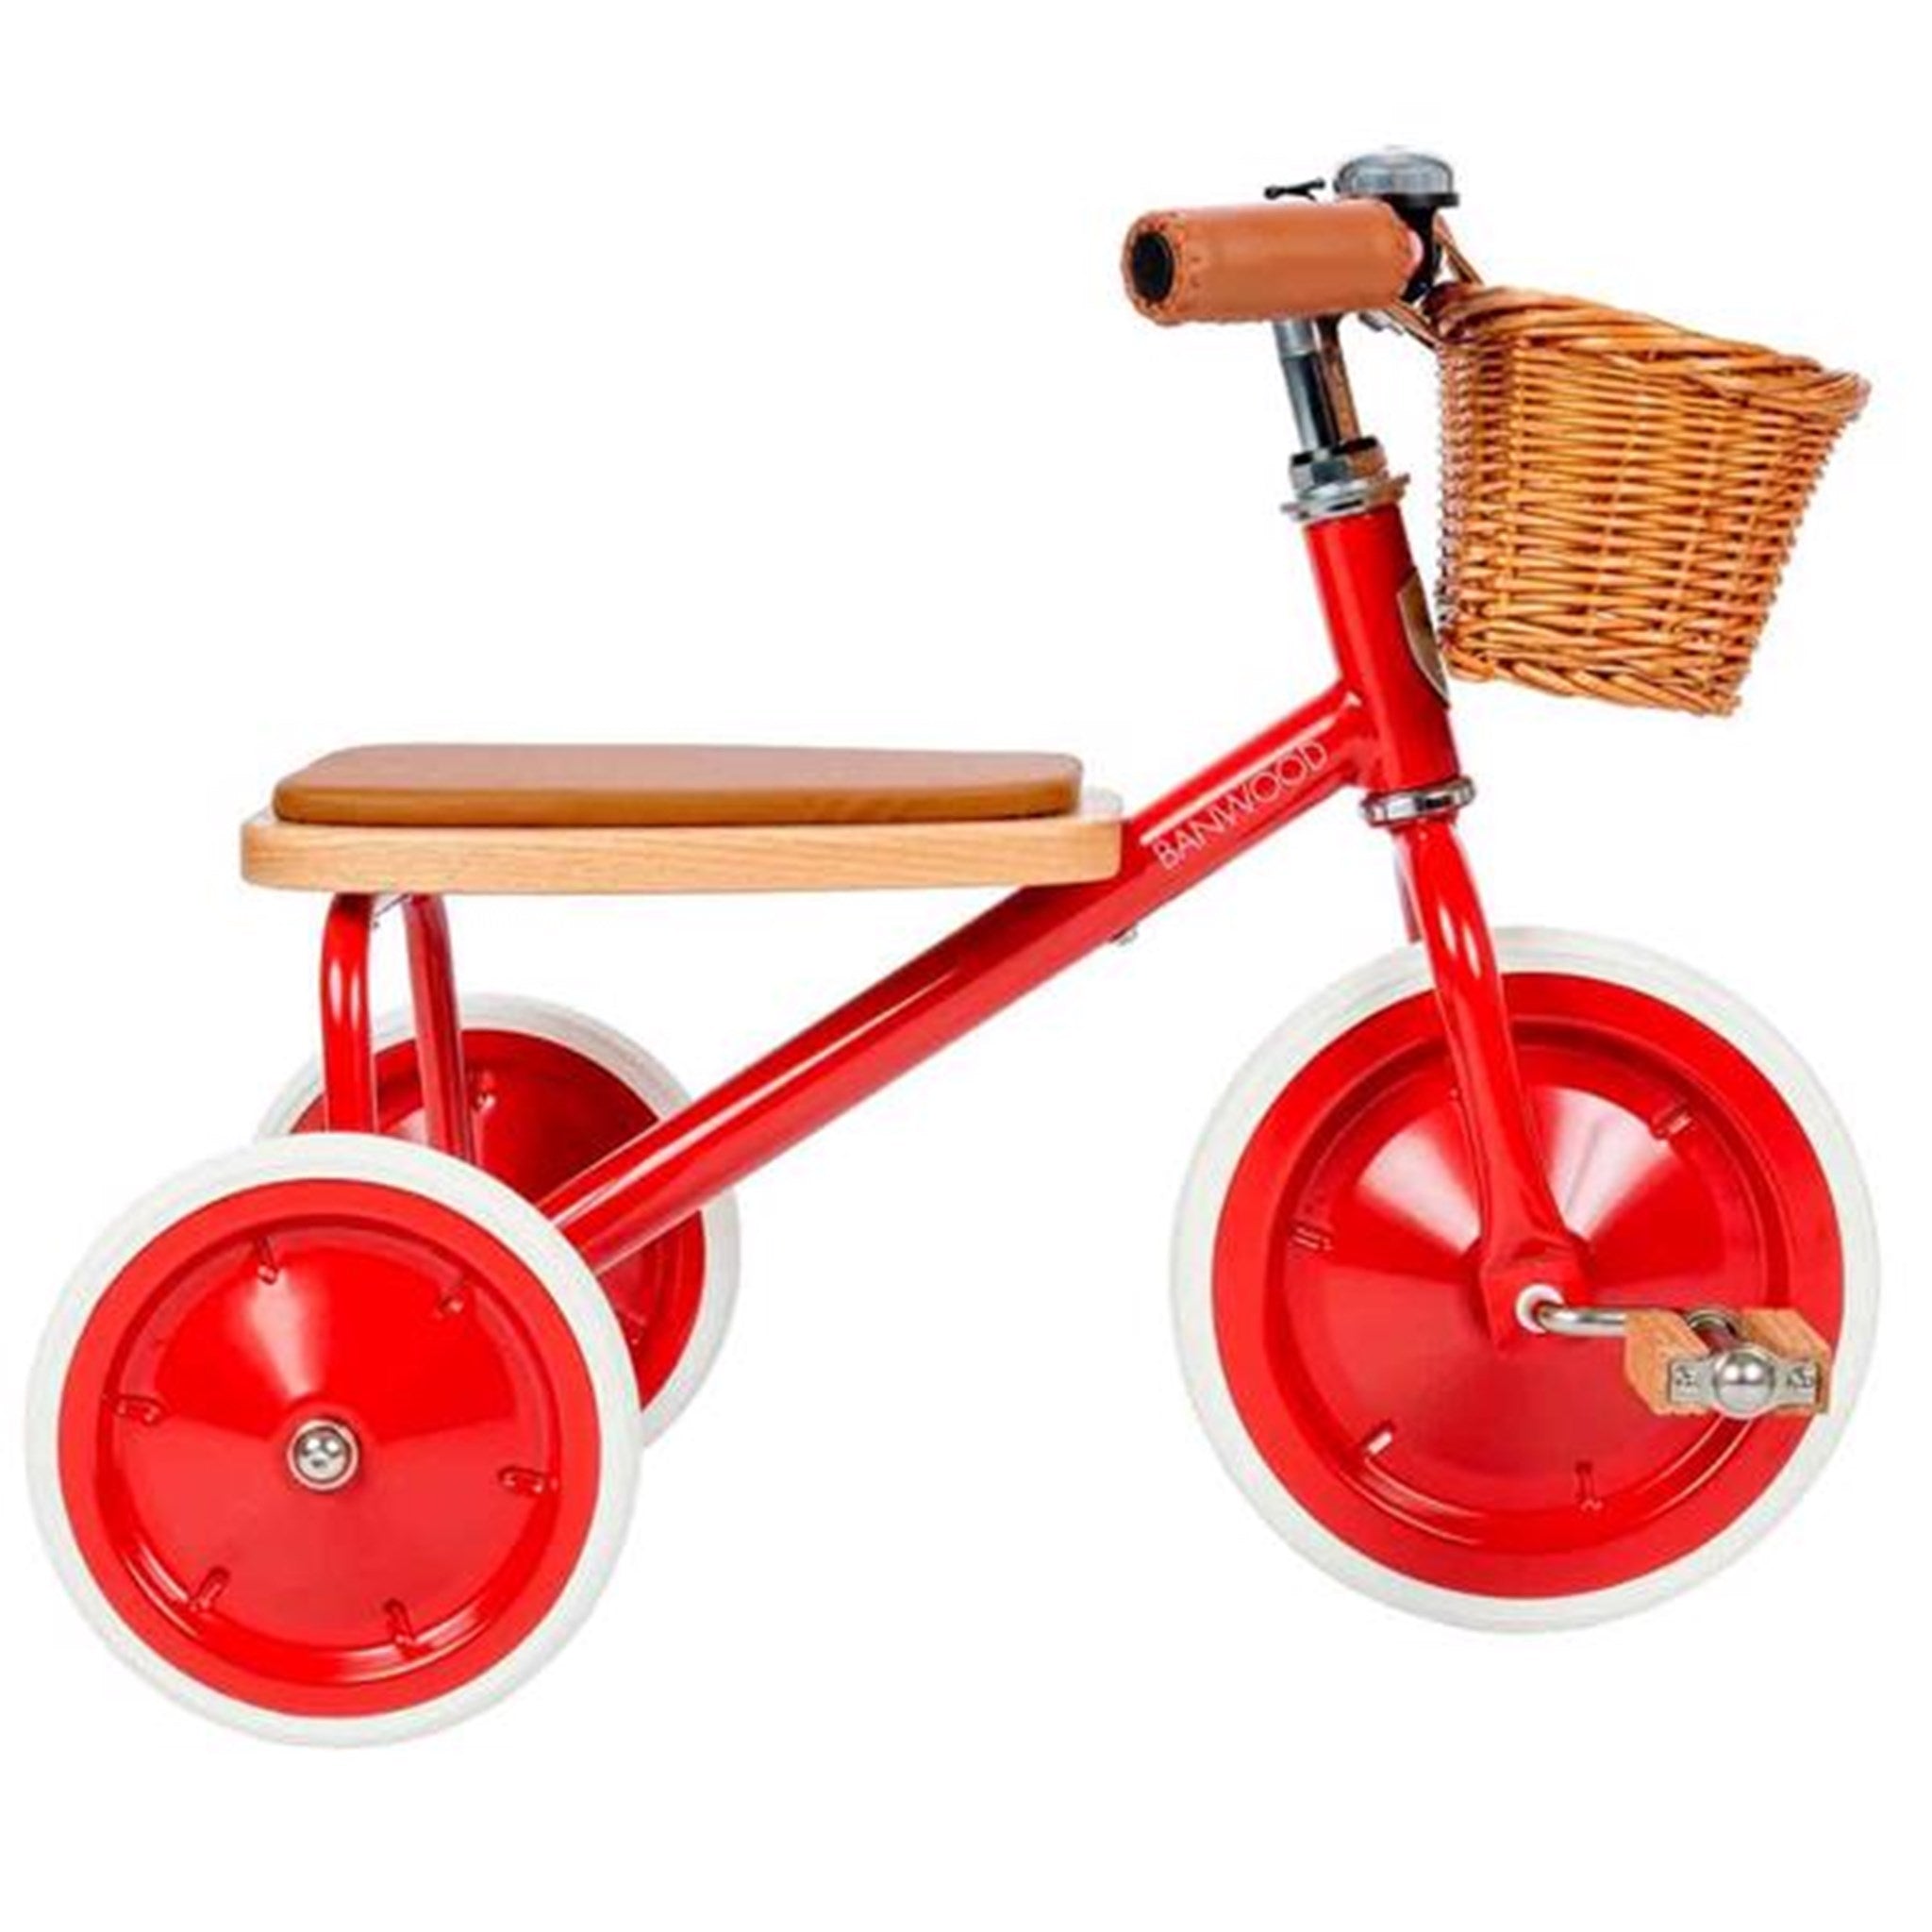 Banwood Trike Red 6